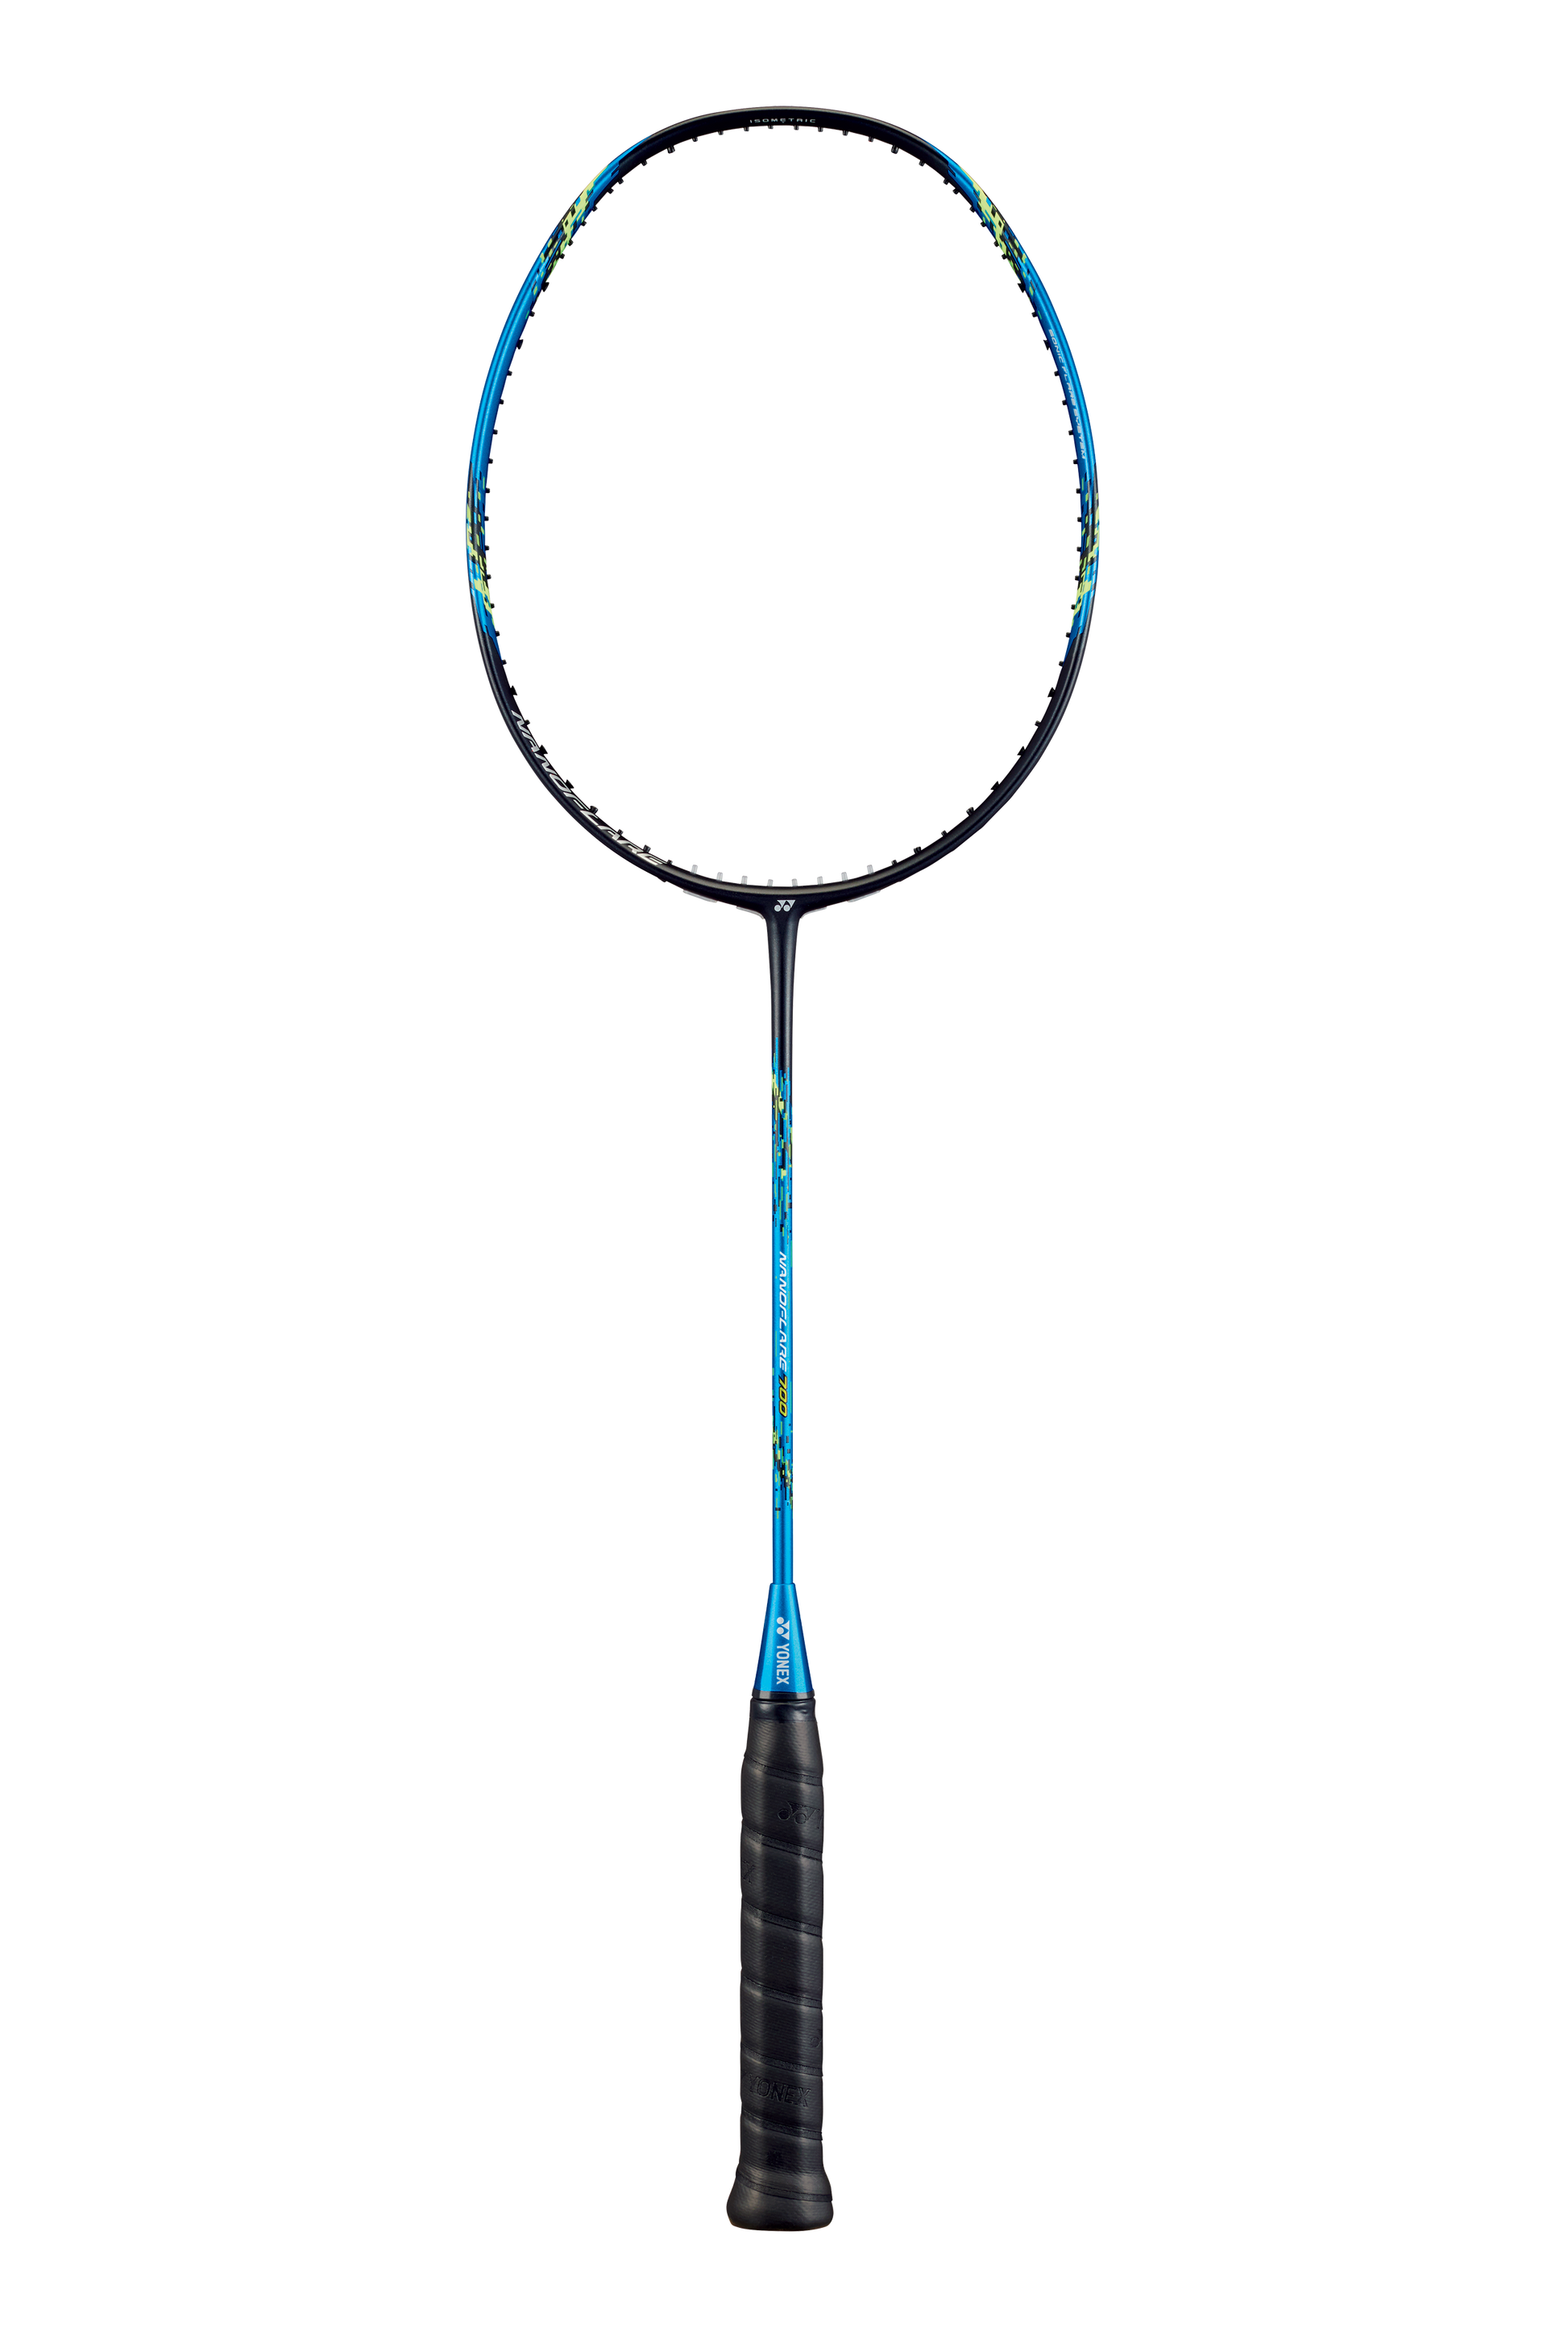 YONEX Badminton Racquet NANOFLARE 700 - Max Sports